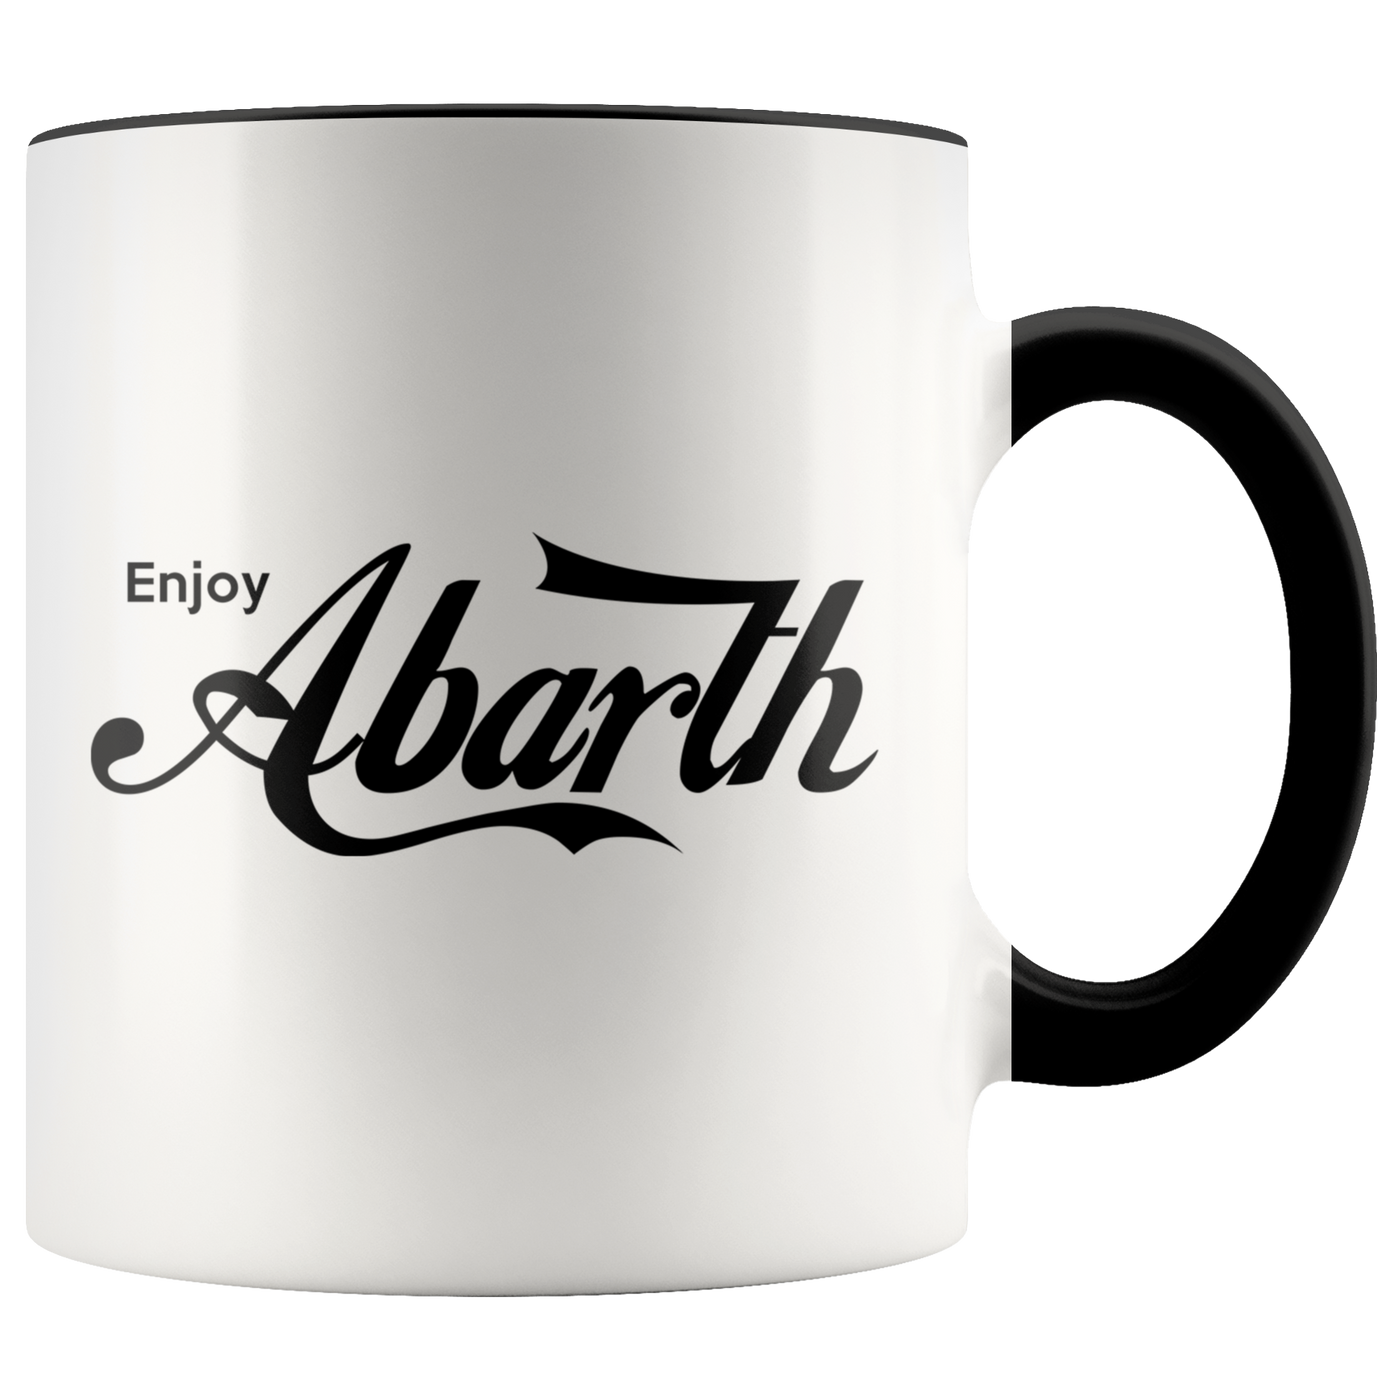 Enjoy Abarth Mug